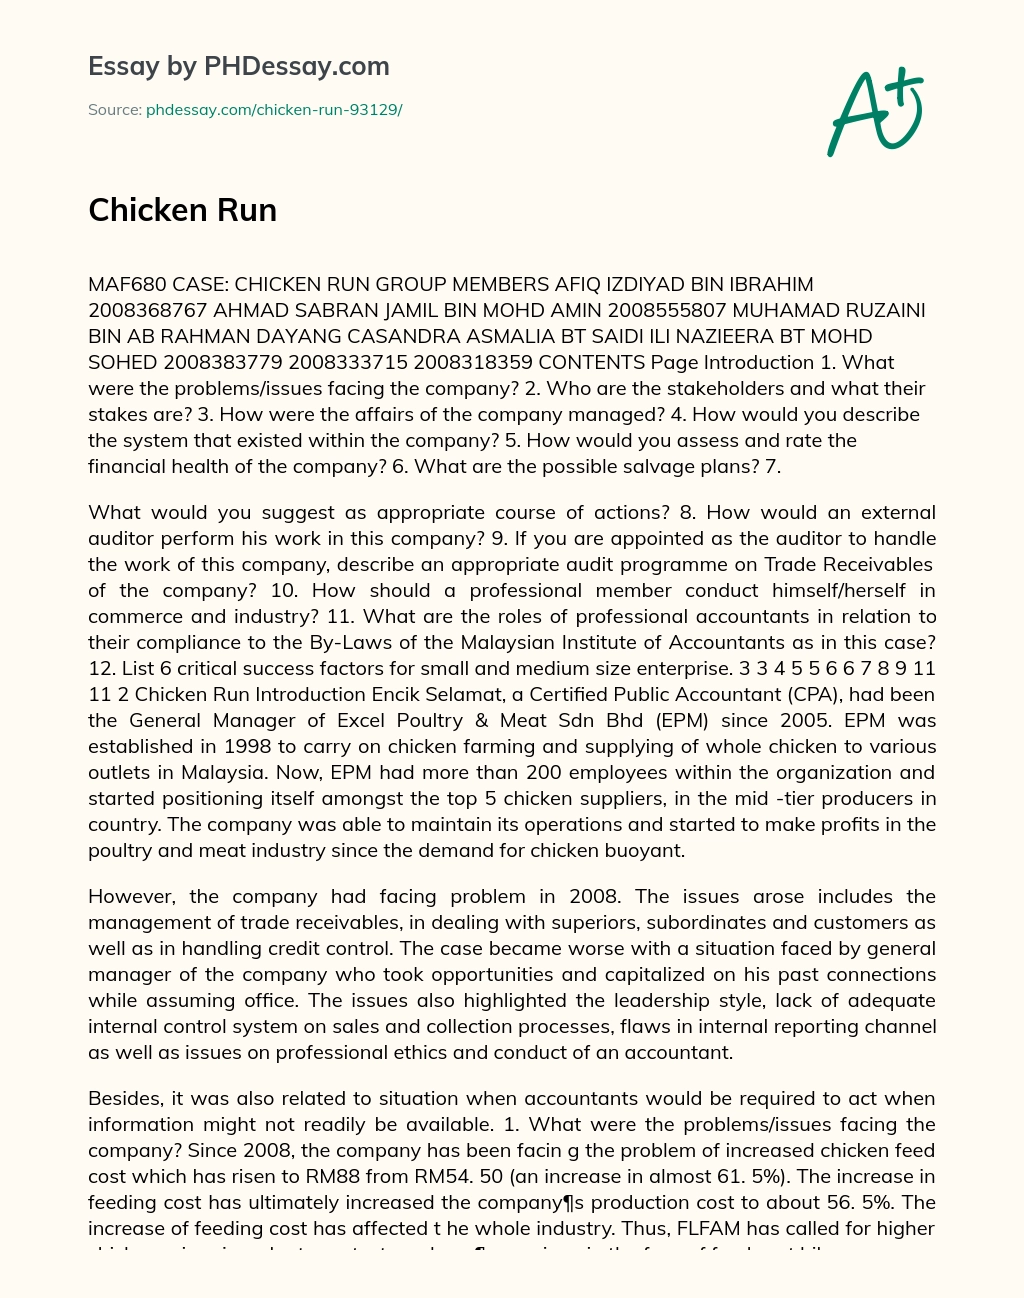 Chicken Run essay